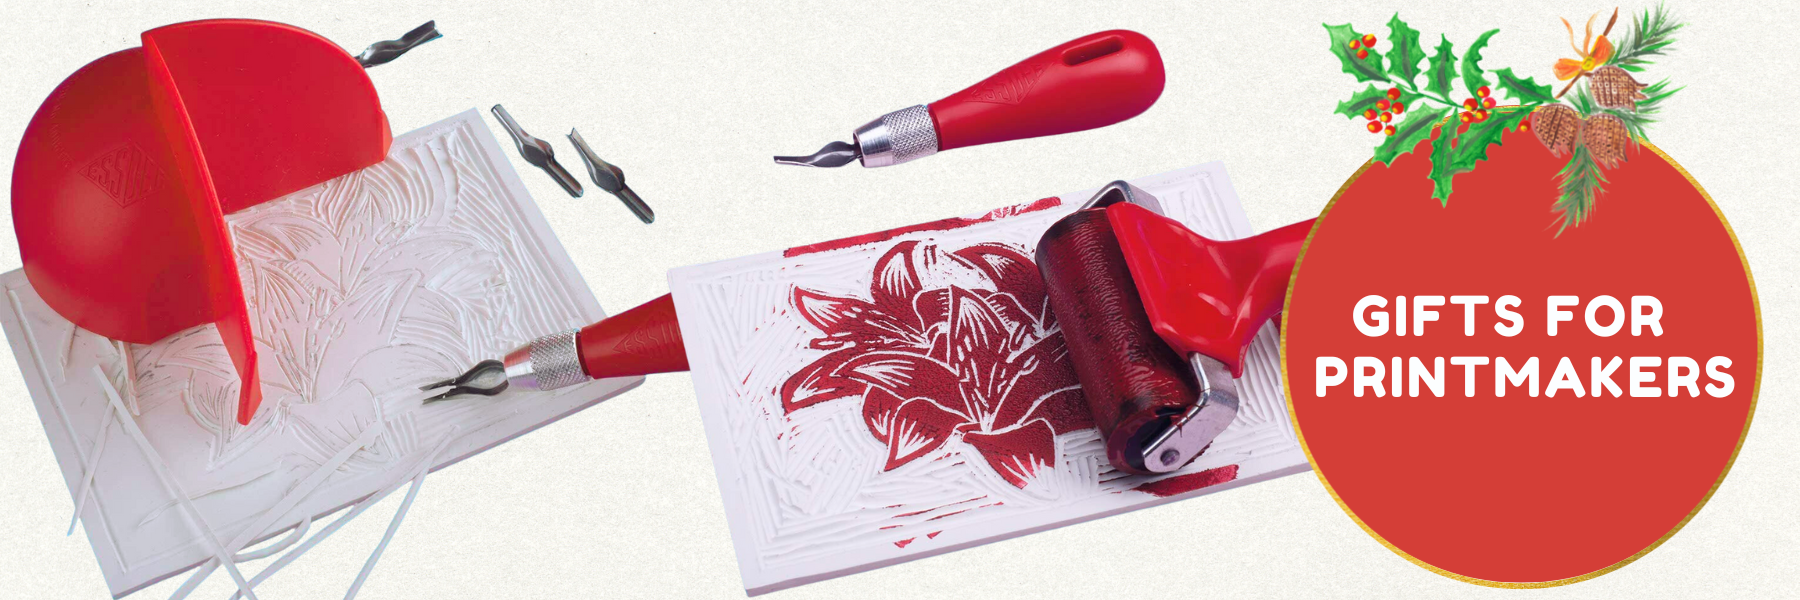 MasterCut Stamp Carving Kit